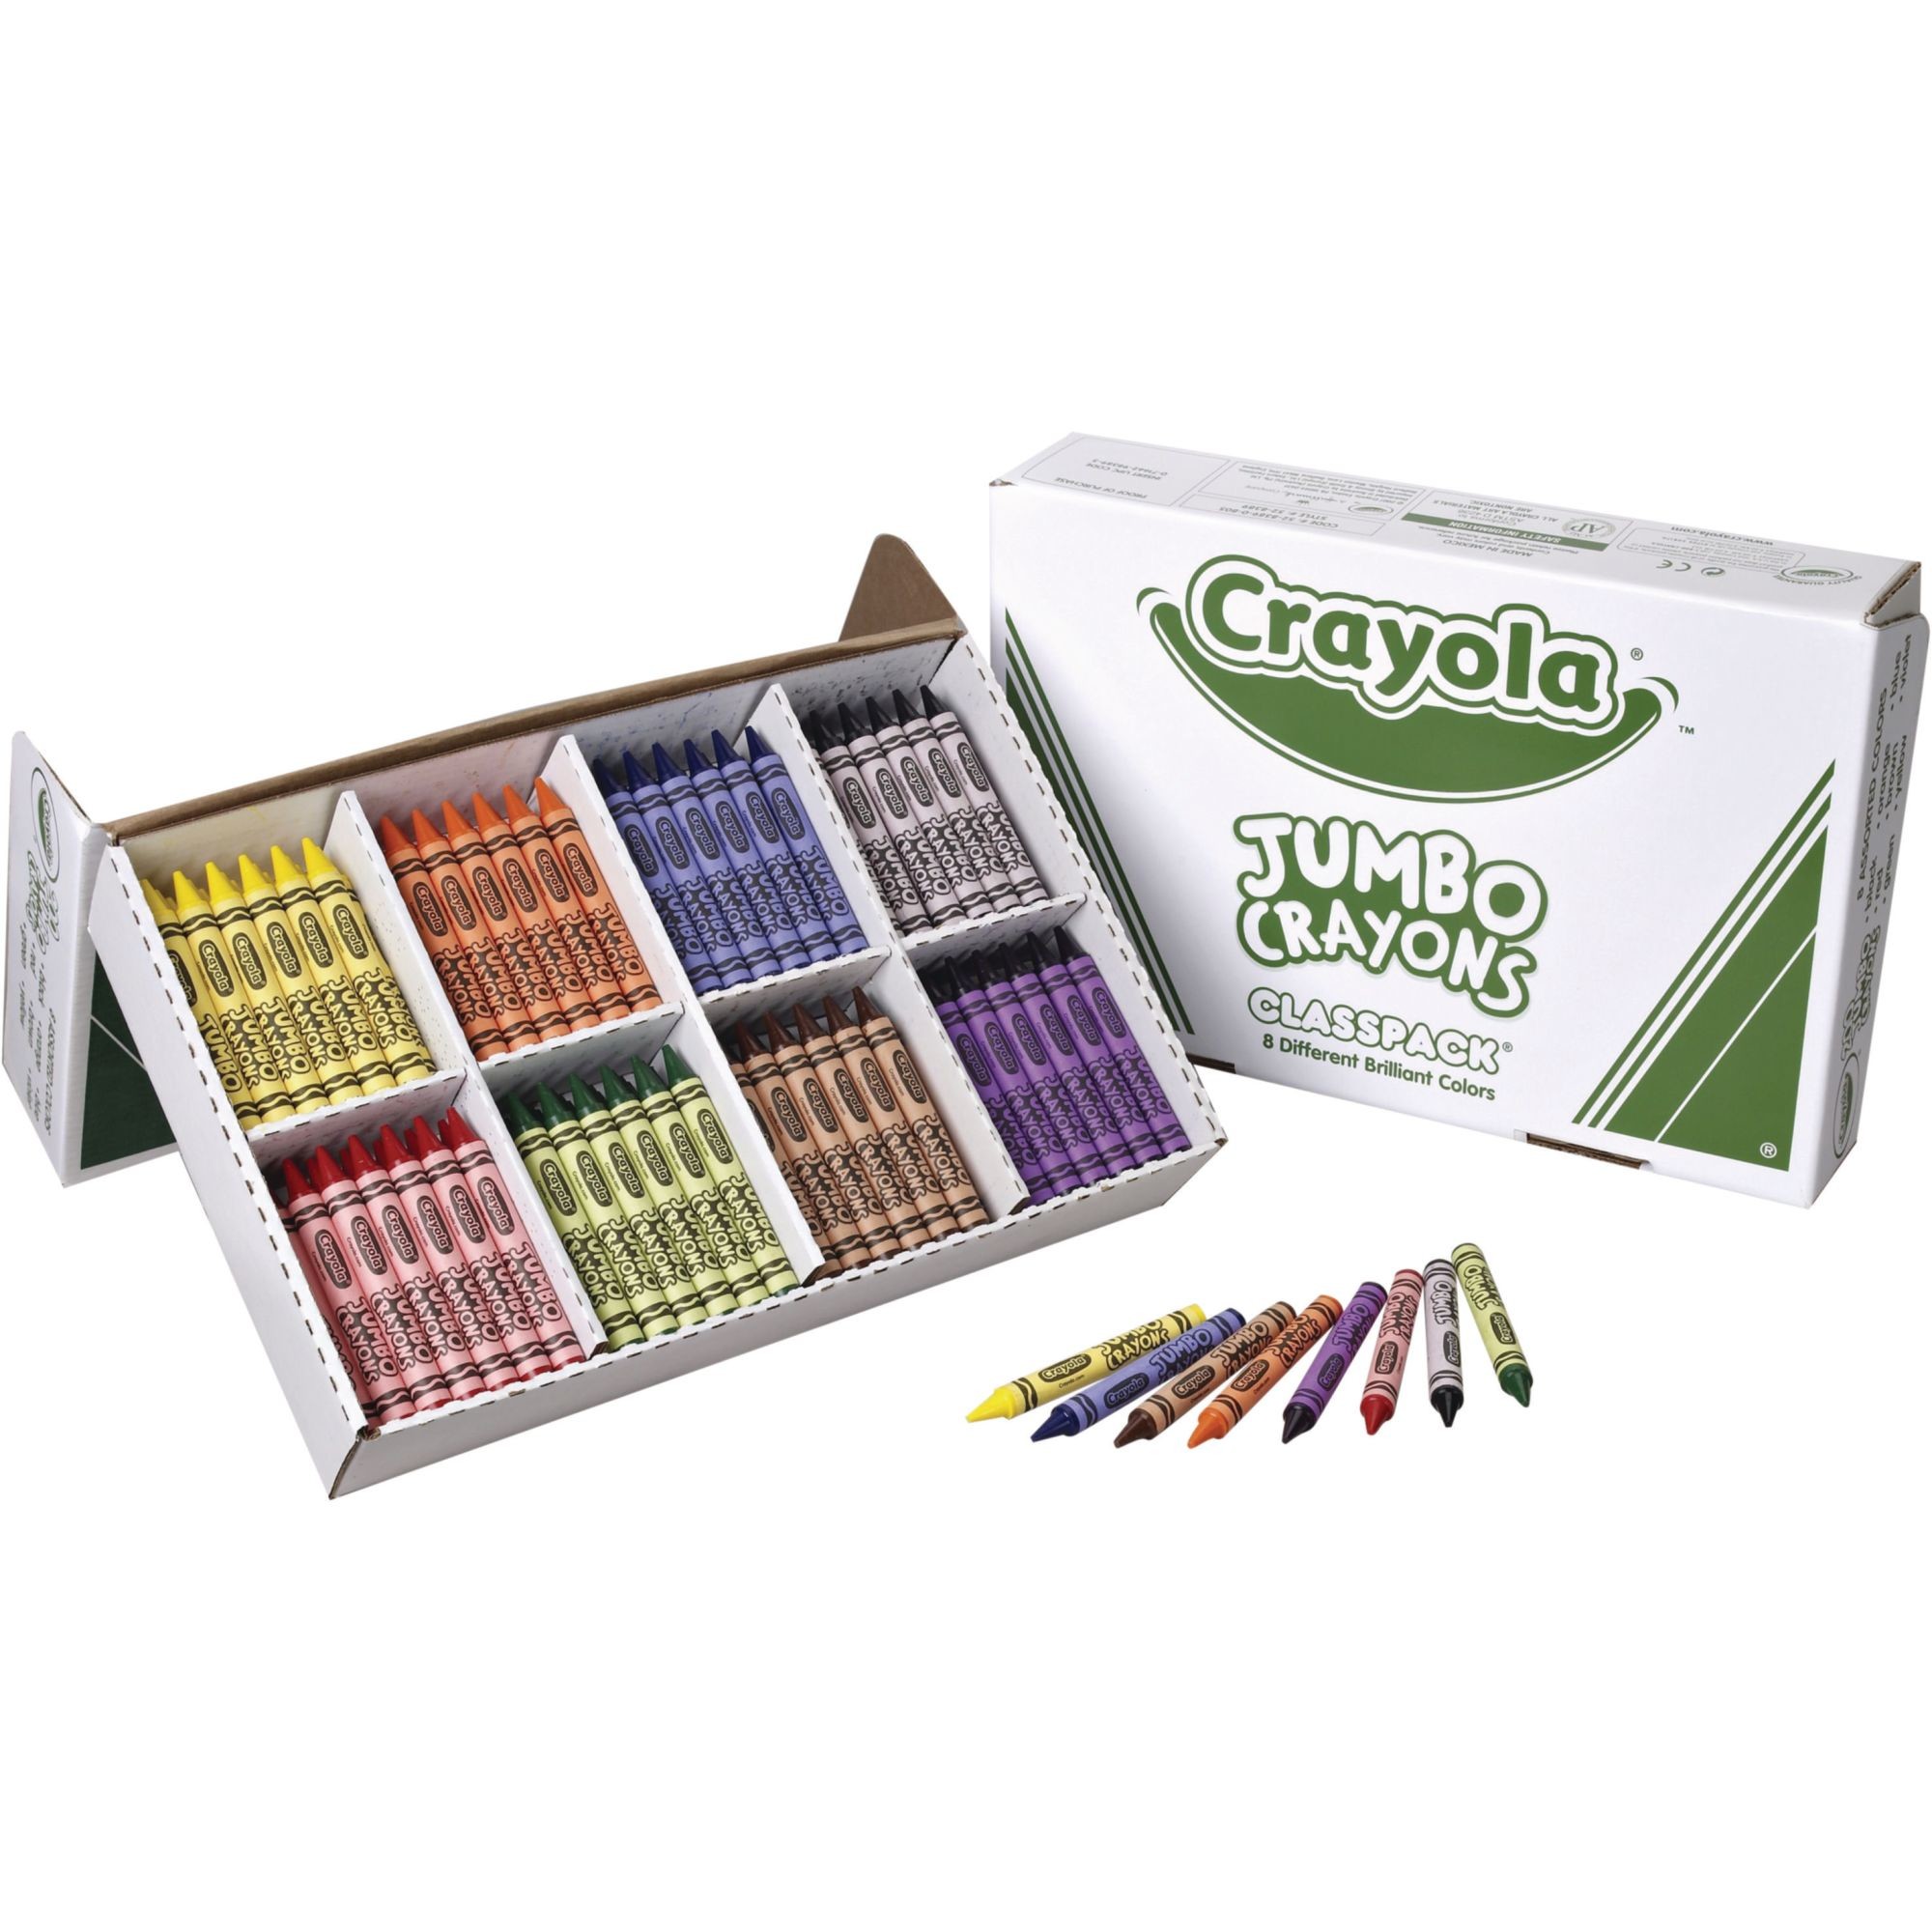 Crayola Crayons, Jumbo - 8 crayons